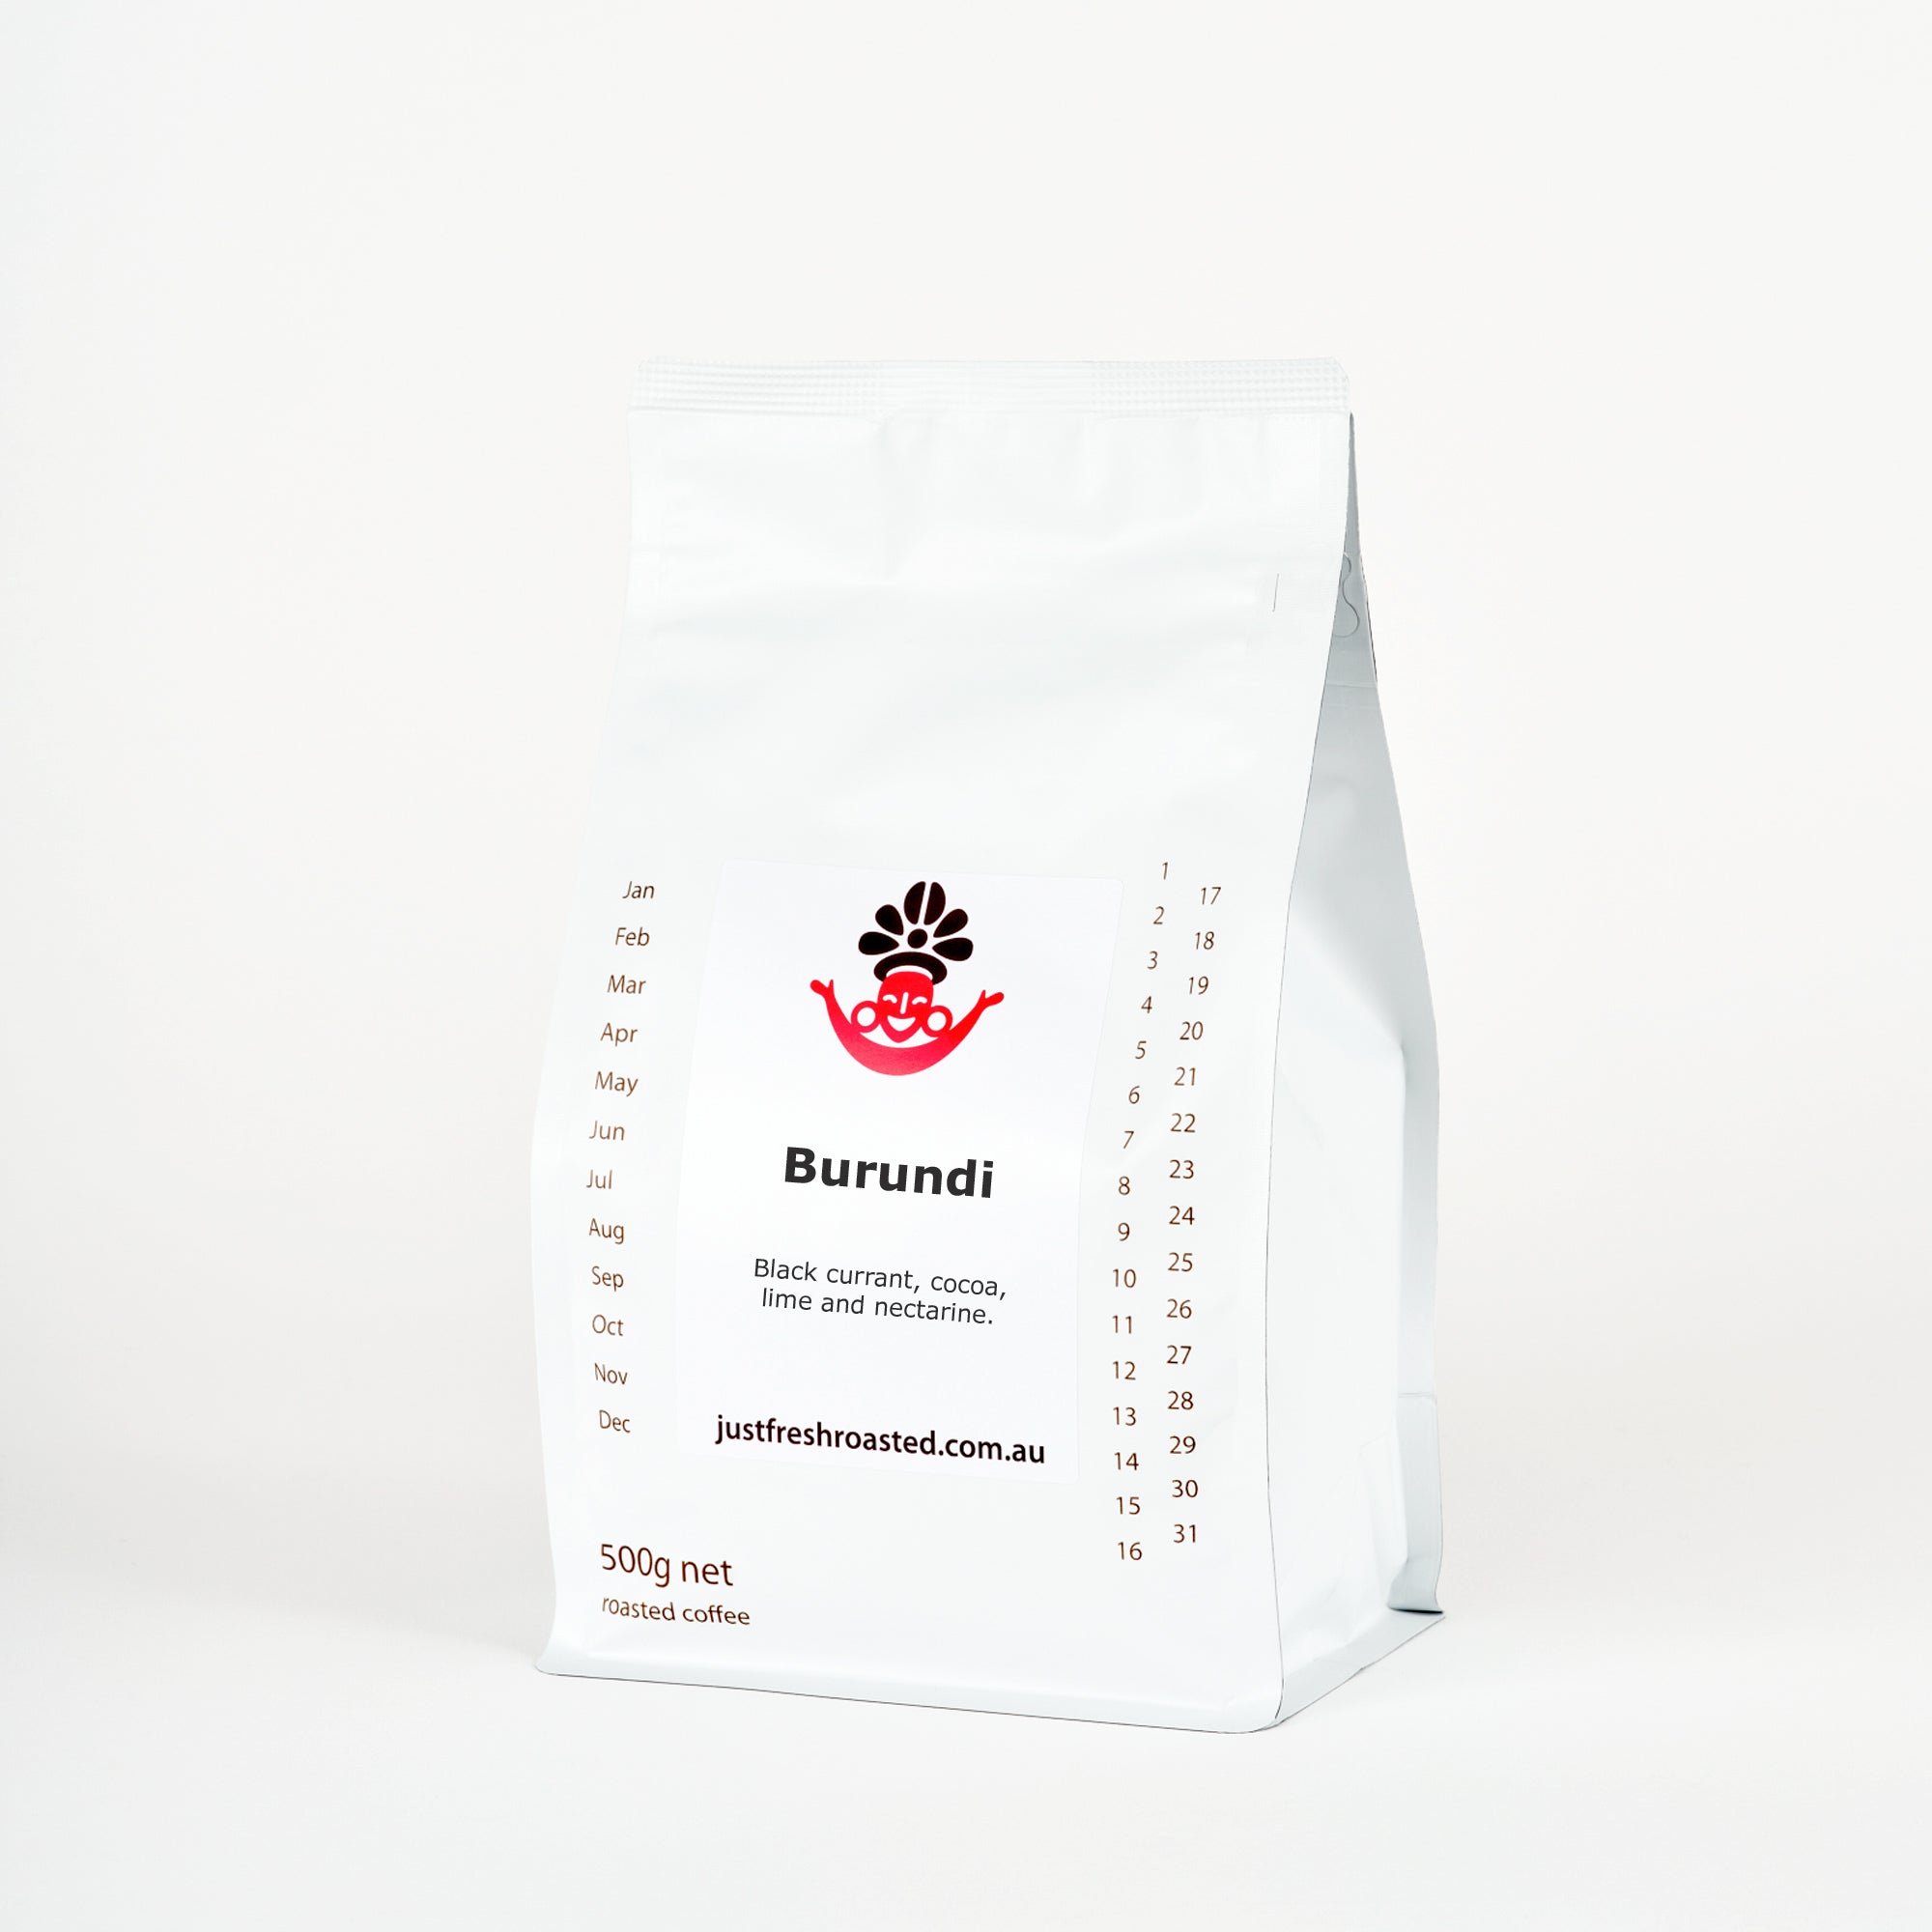 500g pack of single origin Burundi roasted coffee